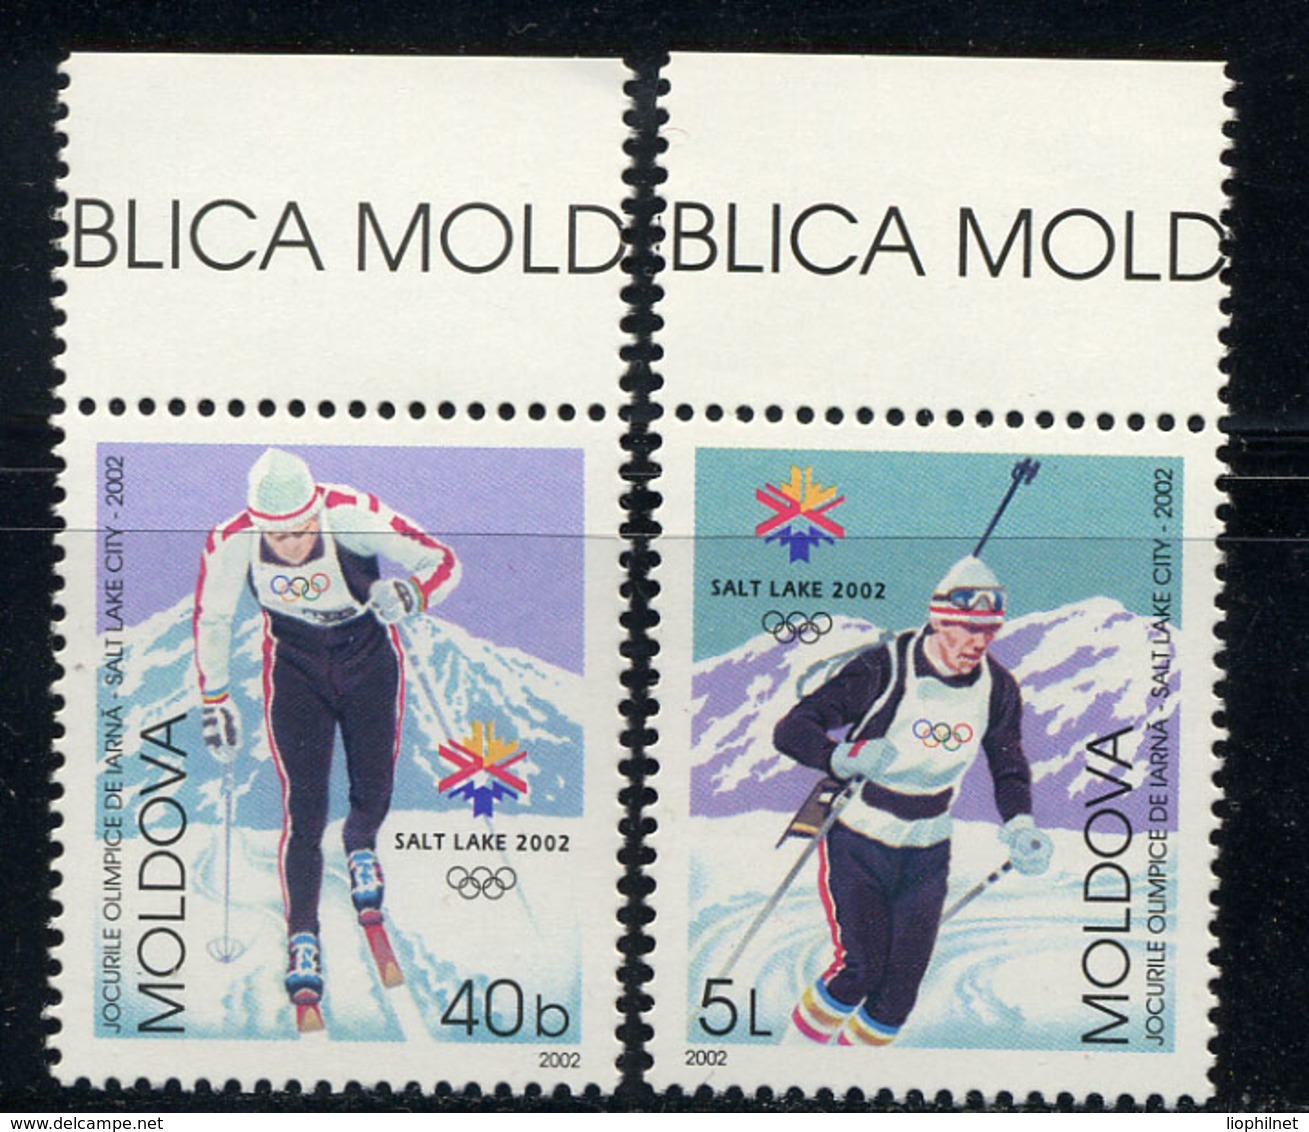 MOLDAVIE MOLDOVA 2002, J.O. Salt Lake City, Ski, 2 Valeurs, Neufs / Mint. R1454 - Hiver 2002: Salt Lake City